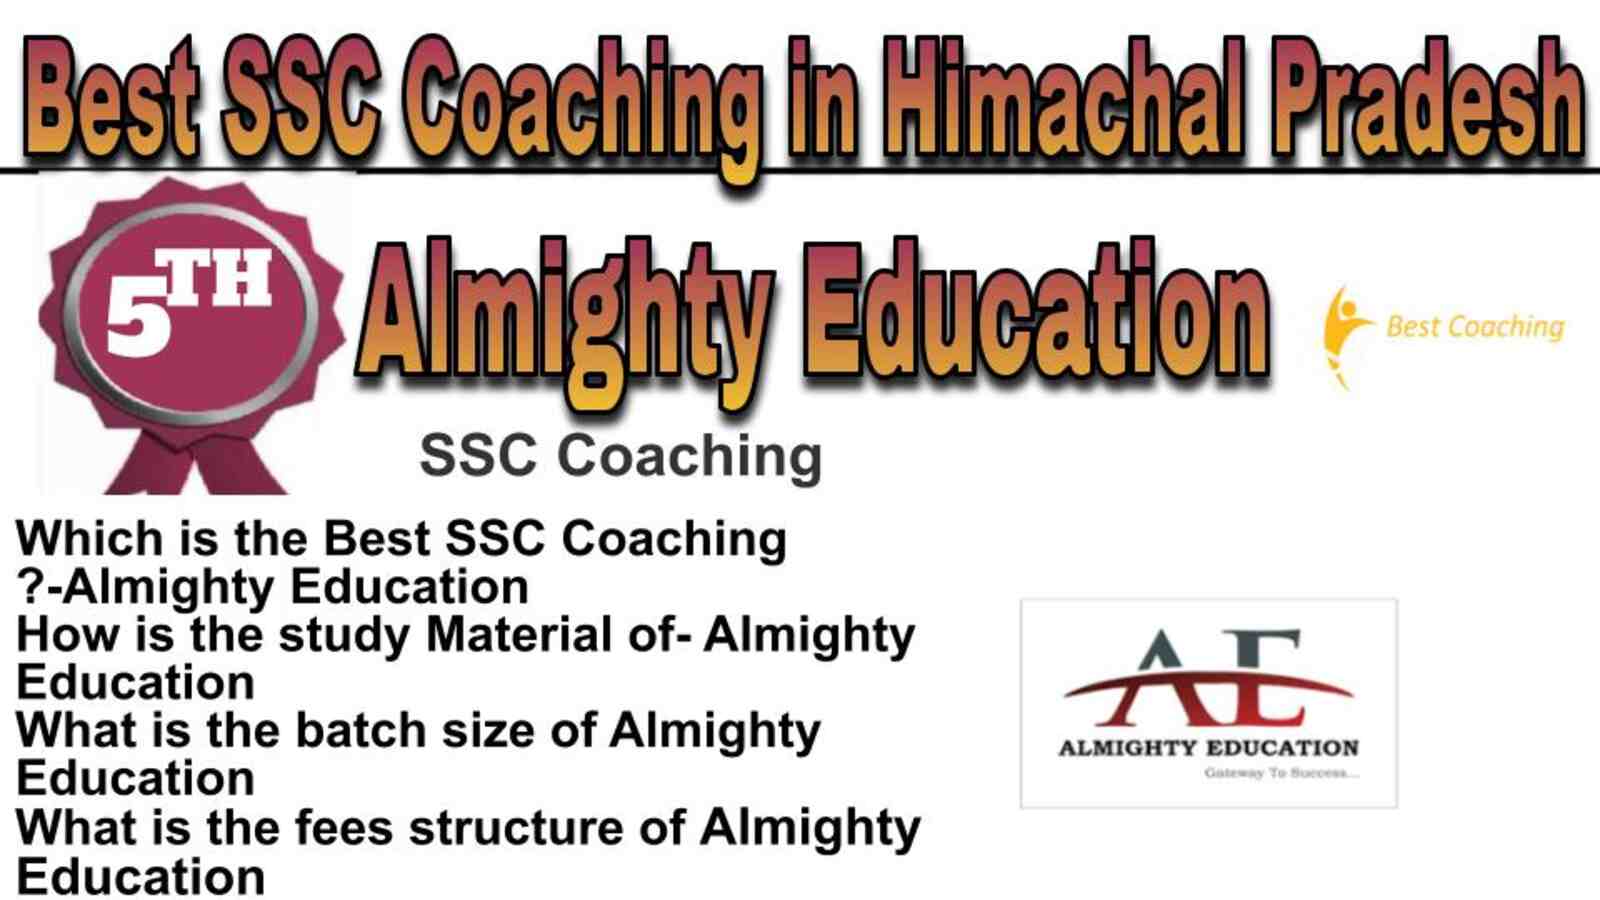 Rank 5 best SSC coaching in Himachal Pradesh